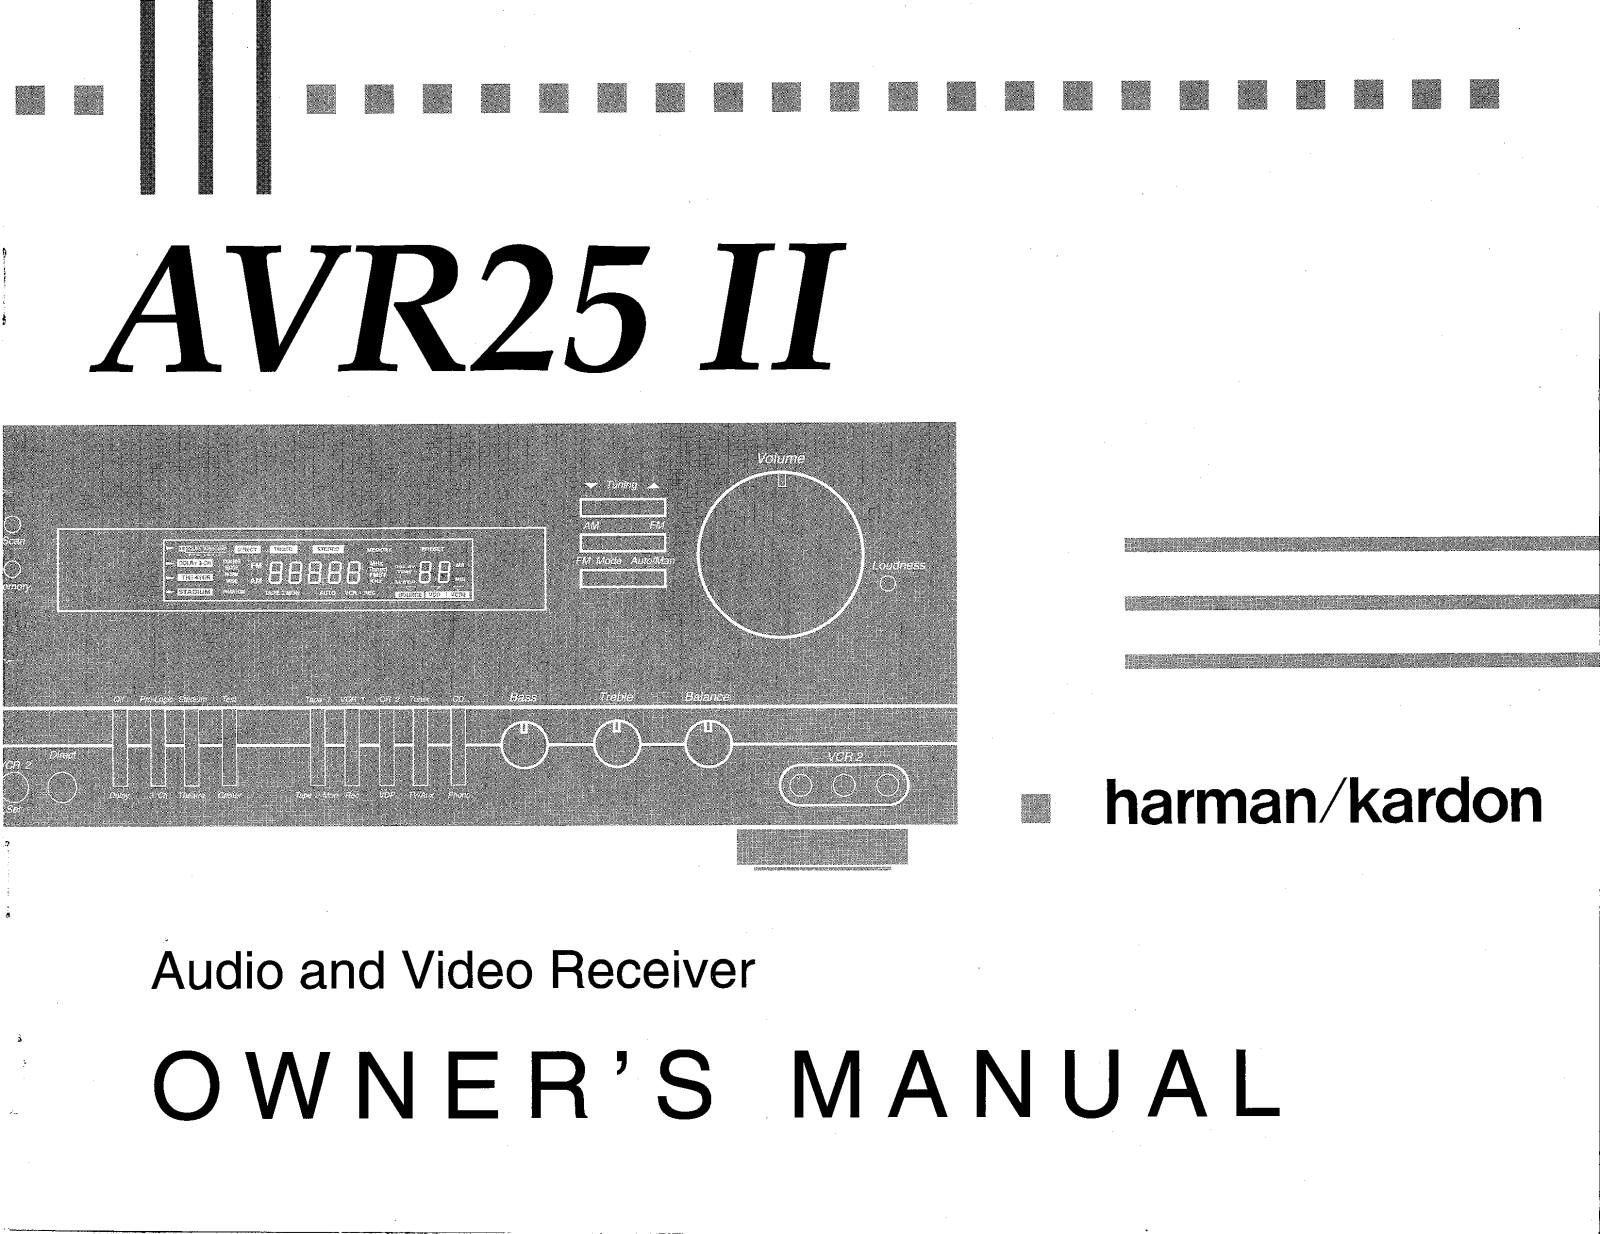 Harman kardon AVR 25 II OWNER’S MANUAL